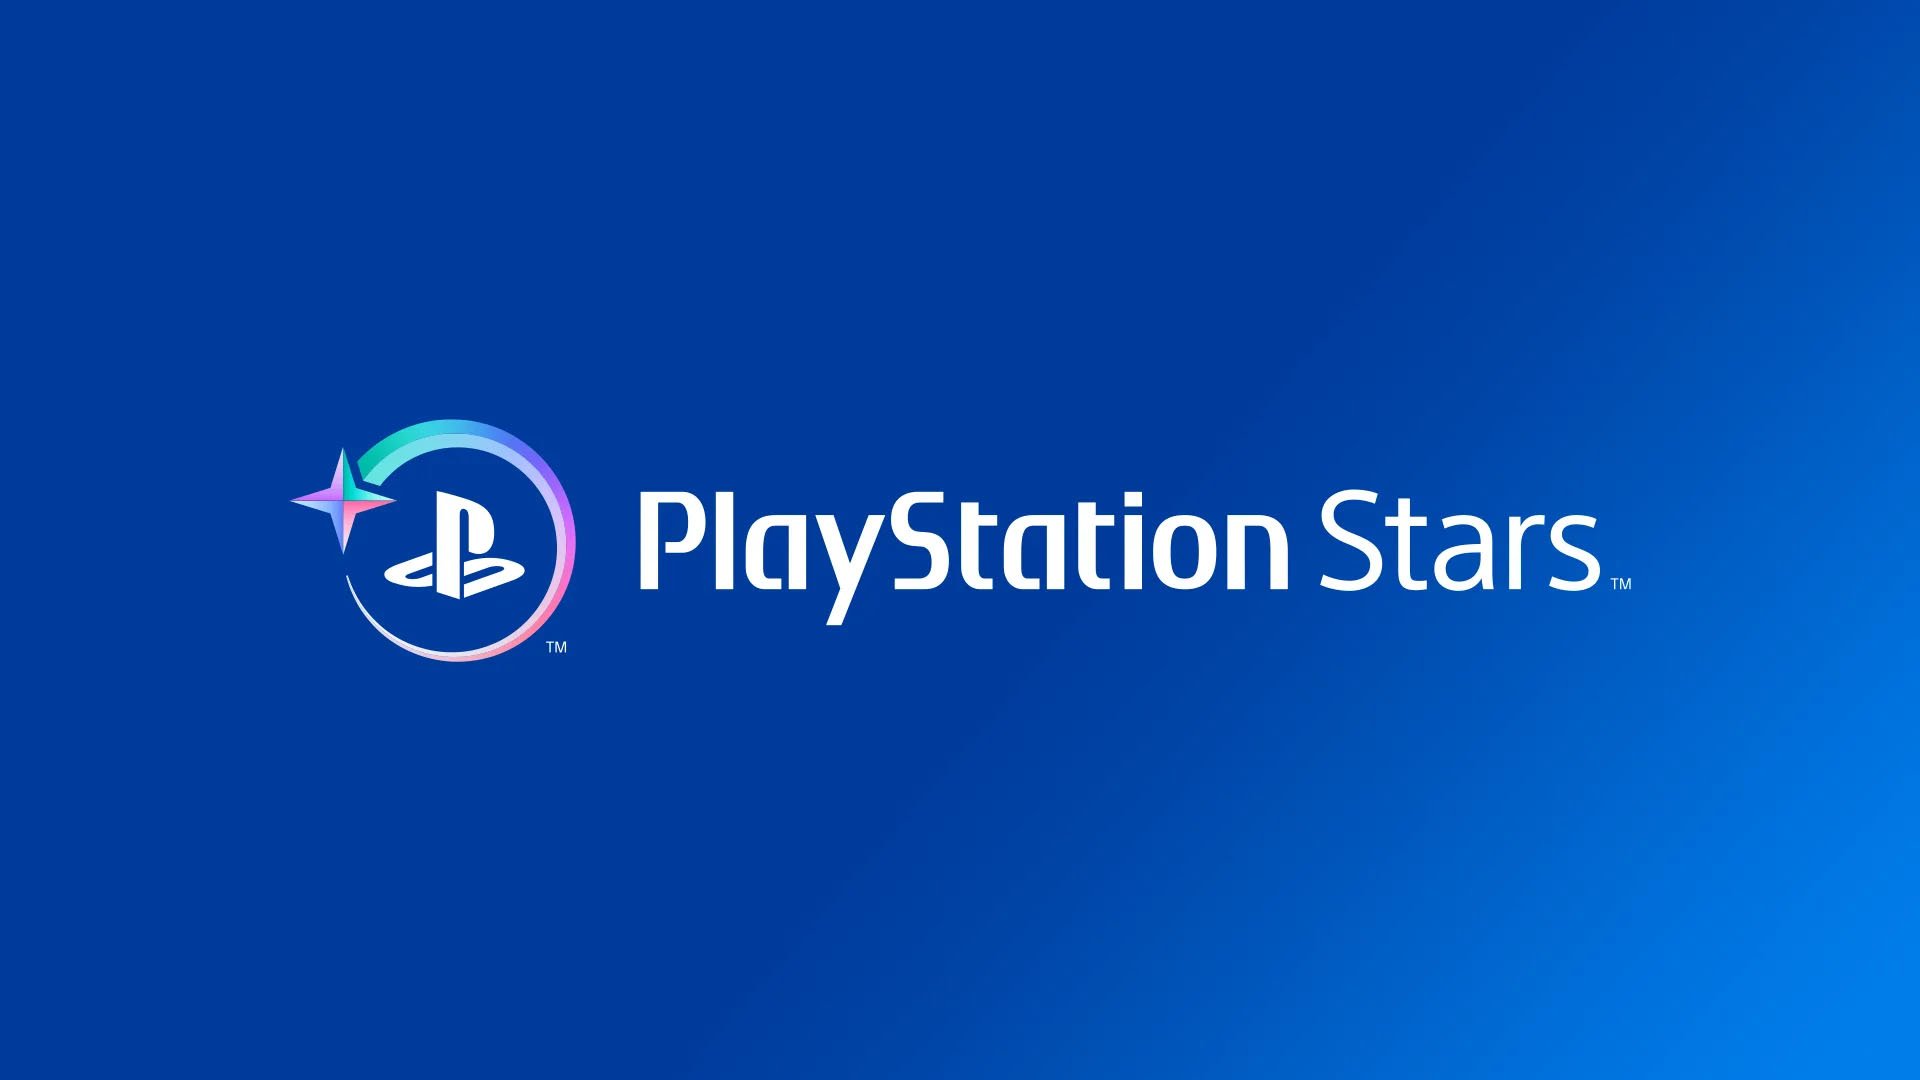 #
      PlayStation Stars loyalty program announced